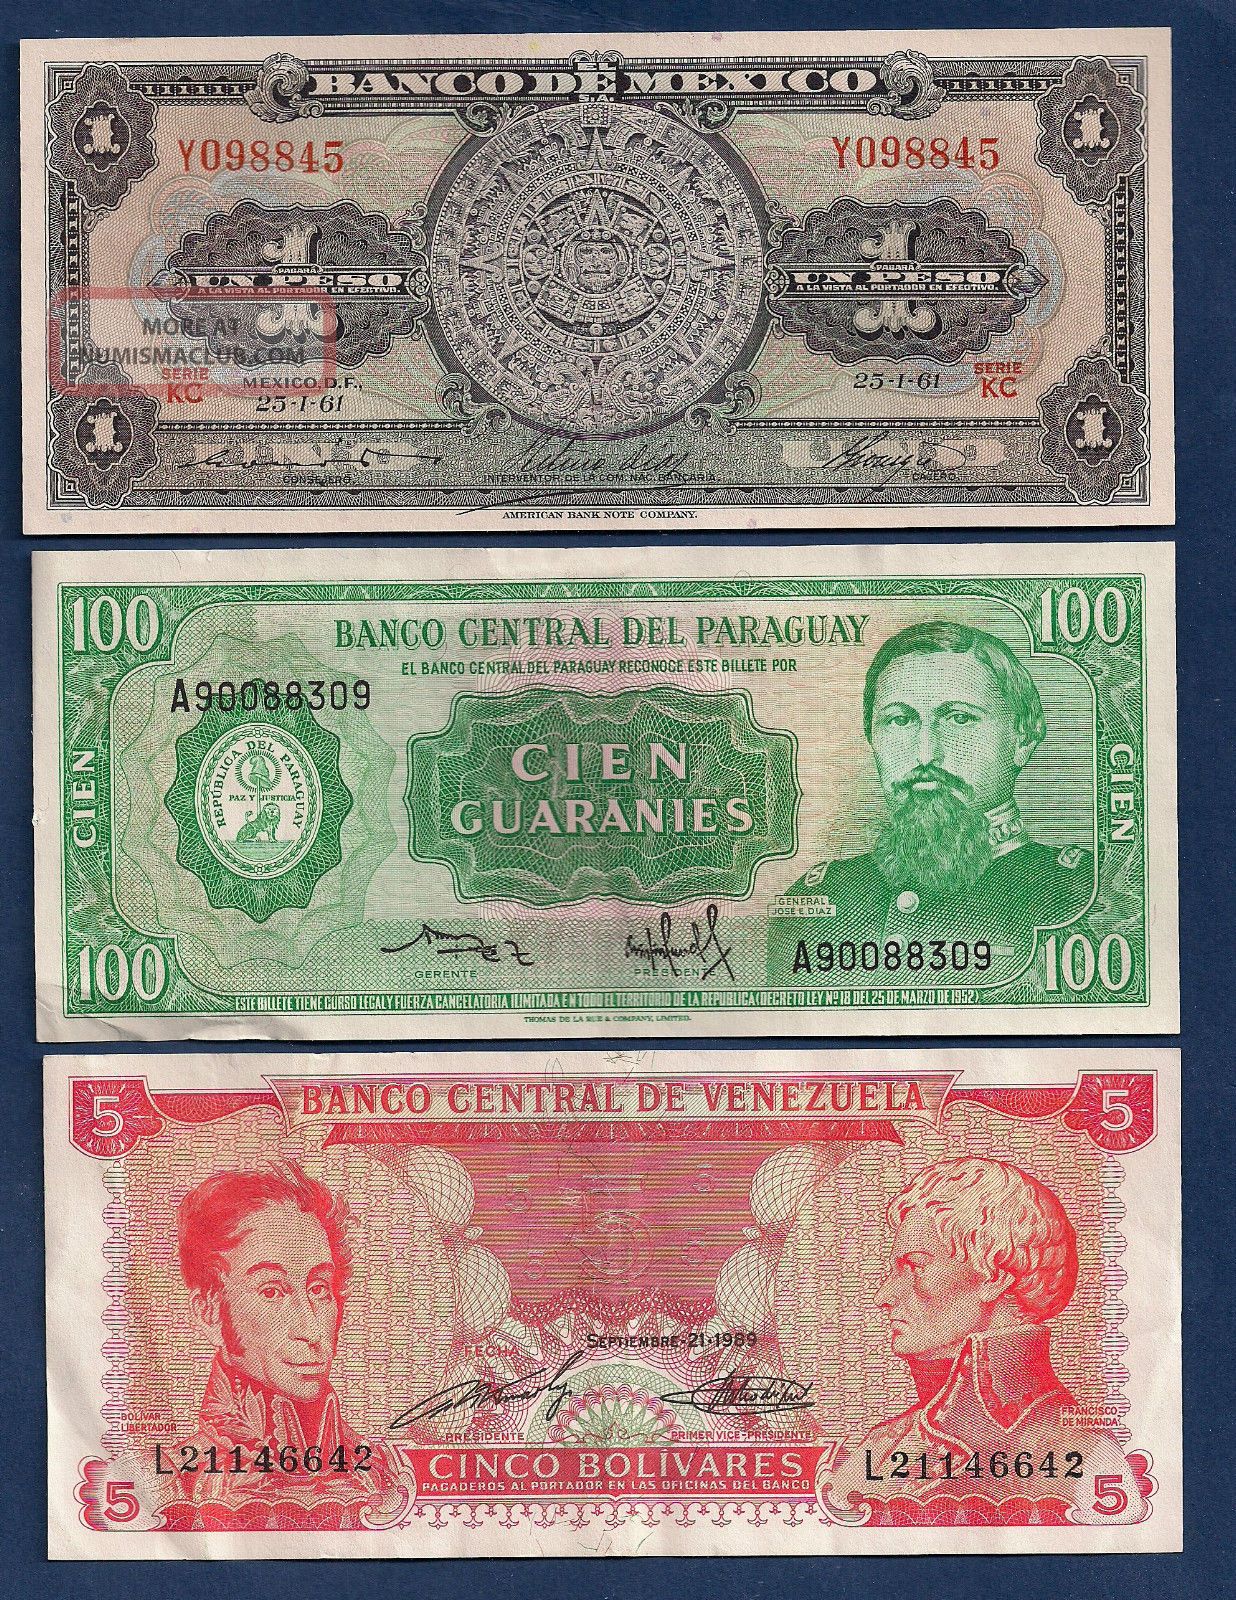 Mexico 1 Peso 1961 P - 59g,  Paraguay 100 Guaranies,  Venezuela 5 Bolivares Paper Money: World photo